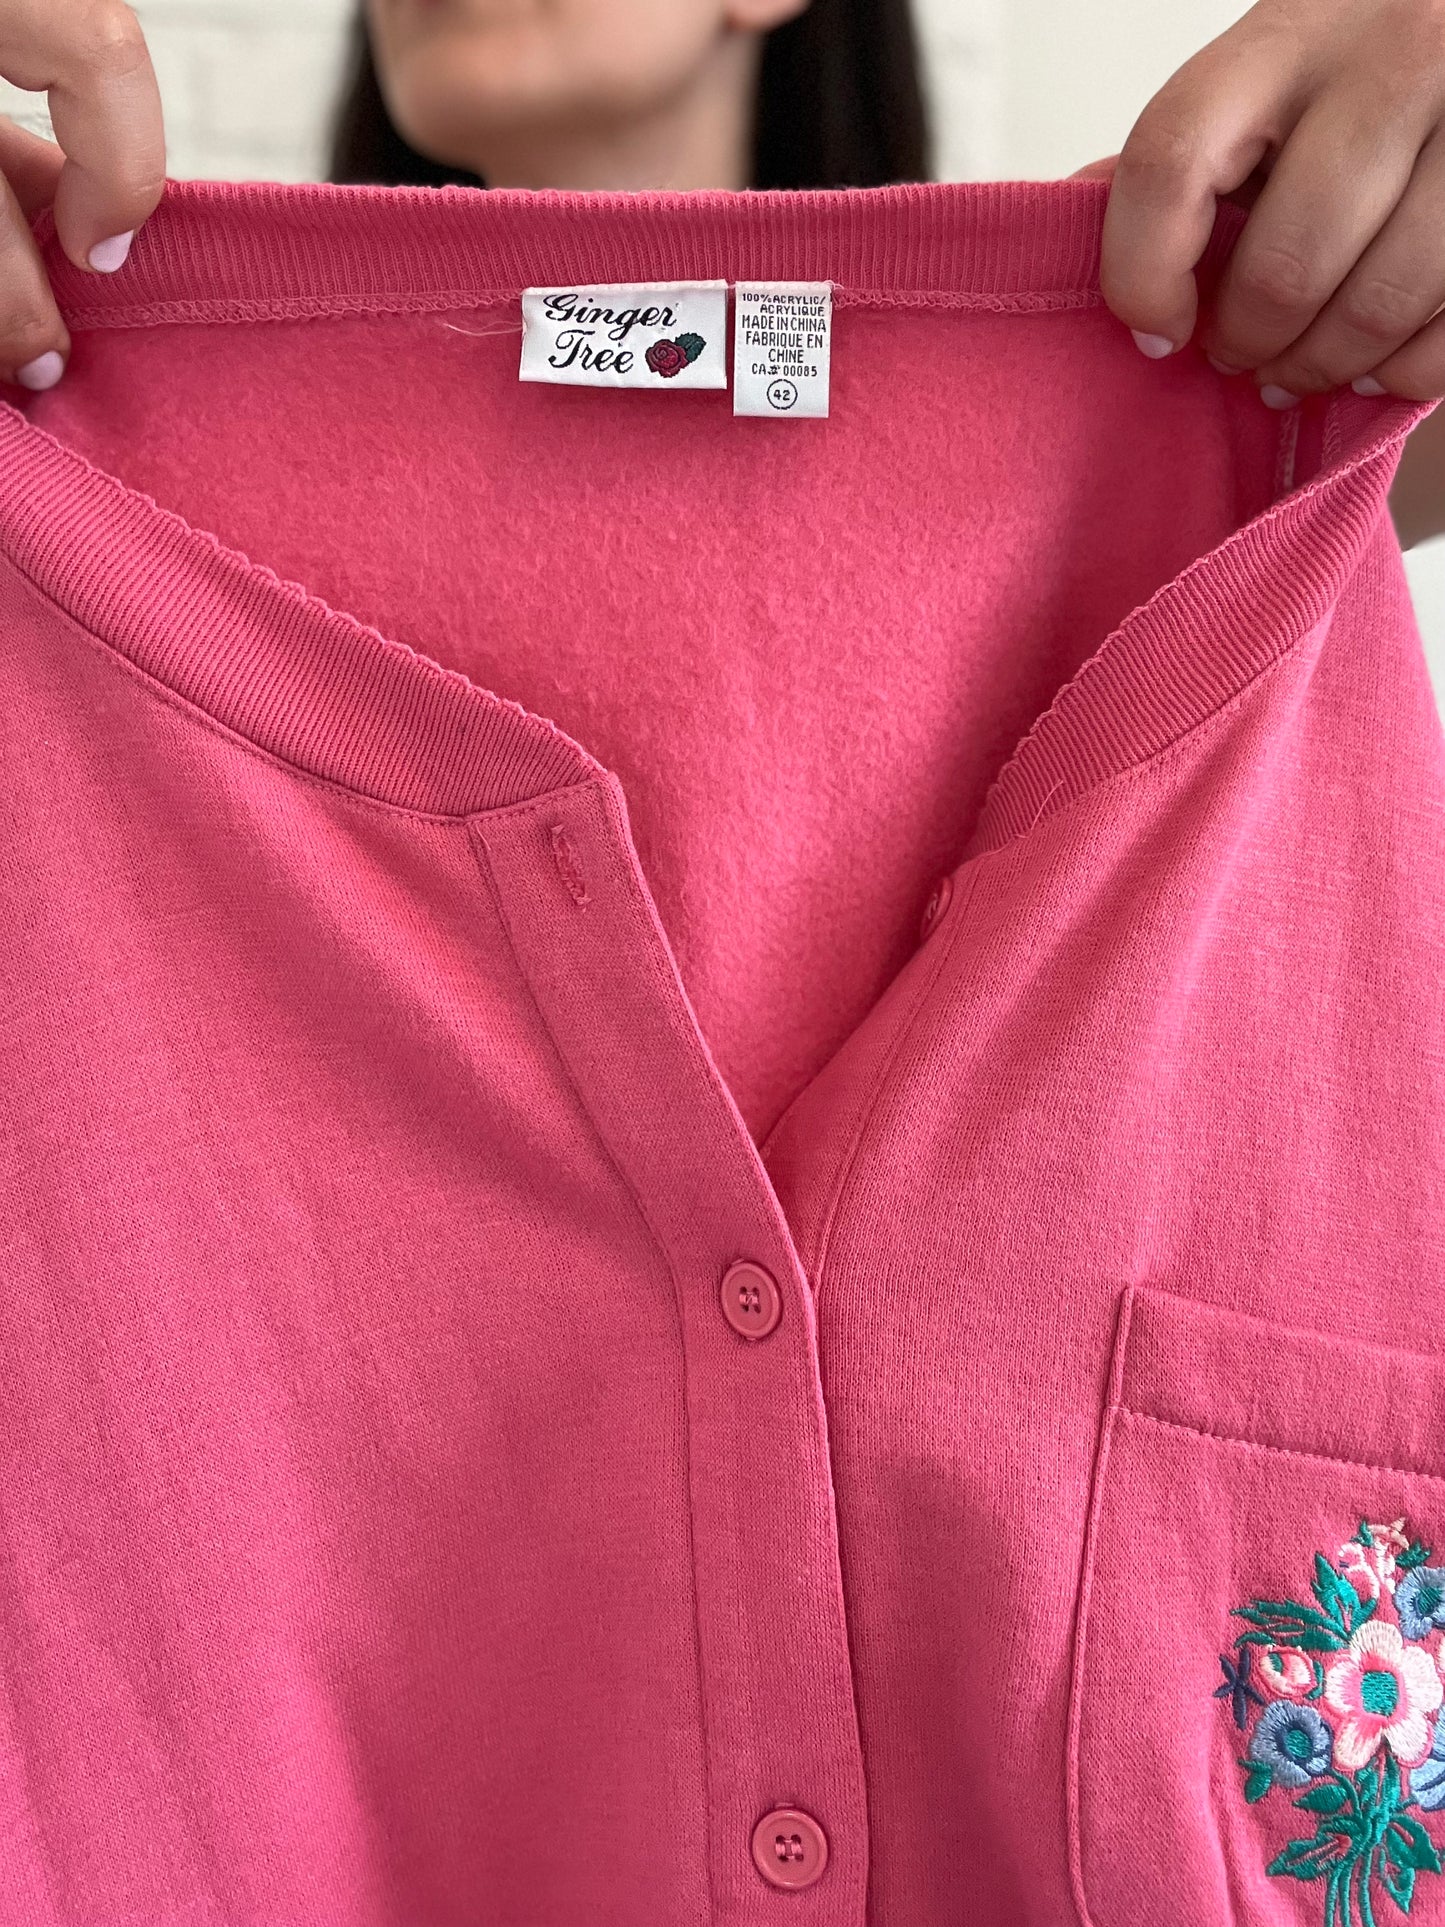 90s Cottage Core Pink Sweater - Size XL/XXL